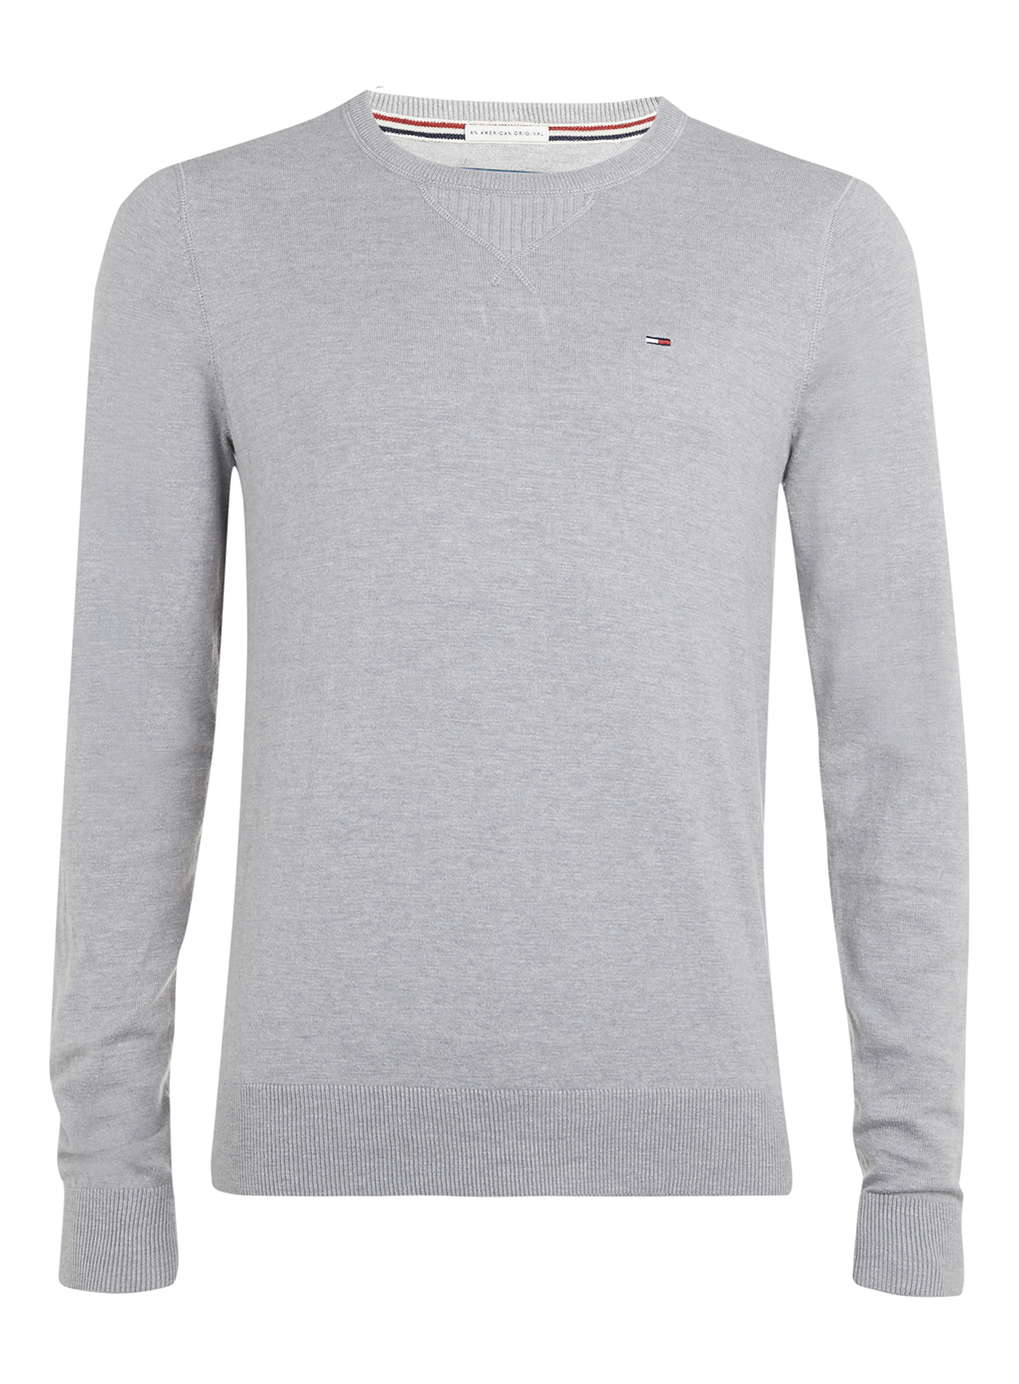 Tommy Hilfiger Hilfiger Denim Grey Sweatshirt in Gray for Men - Lyst